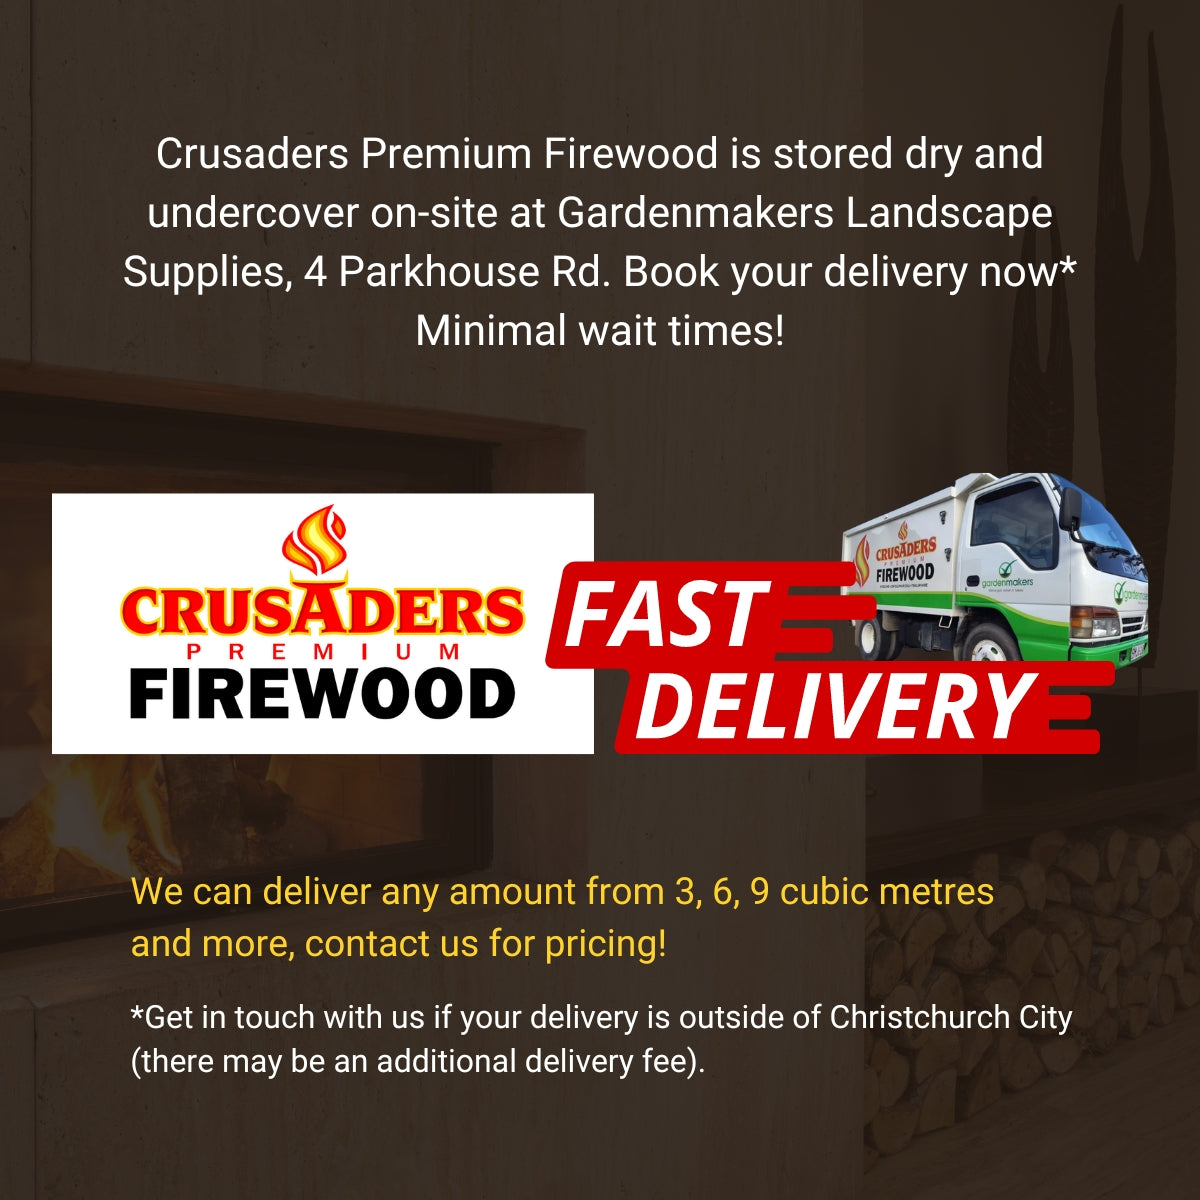 Crusaders Premium Firewood - Oregon Delivery